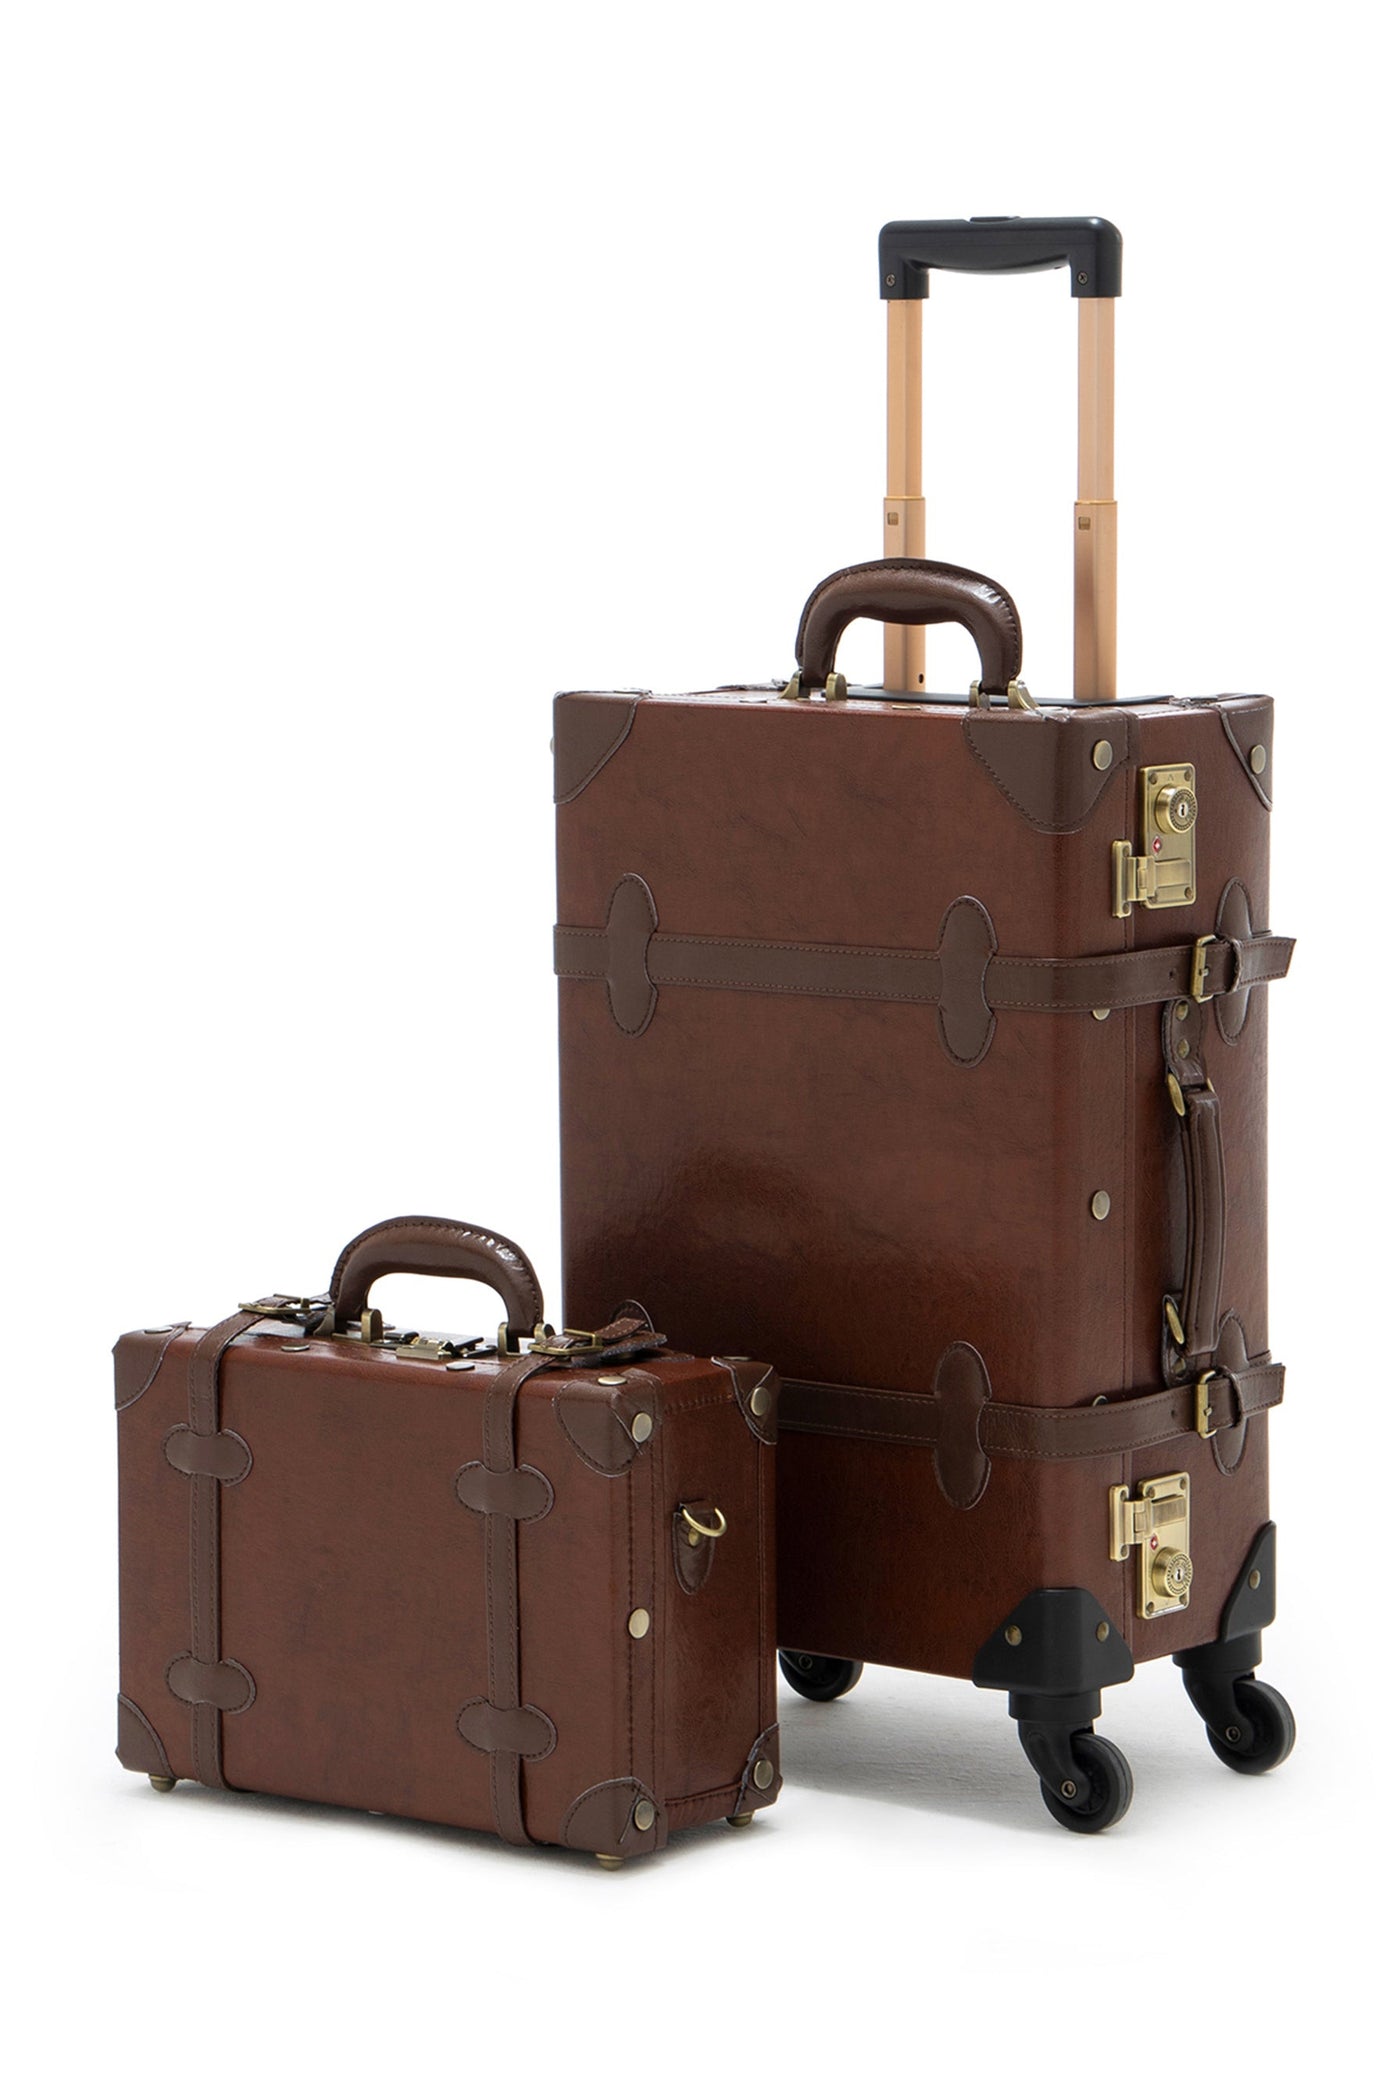 Minimalism 2 Pieces Luggage Set - Caramel Brown's